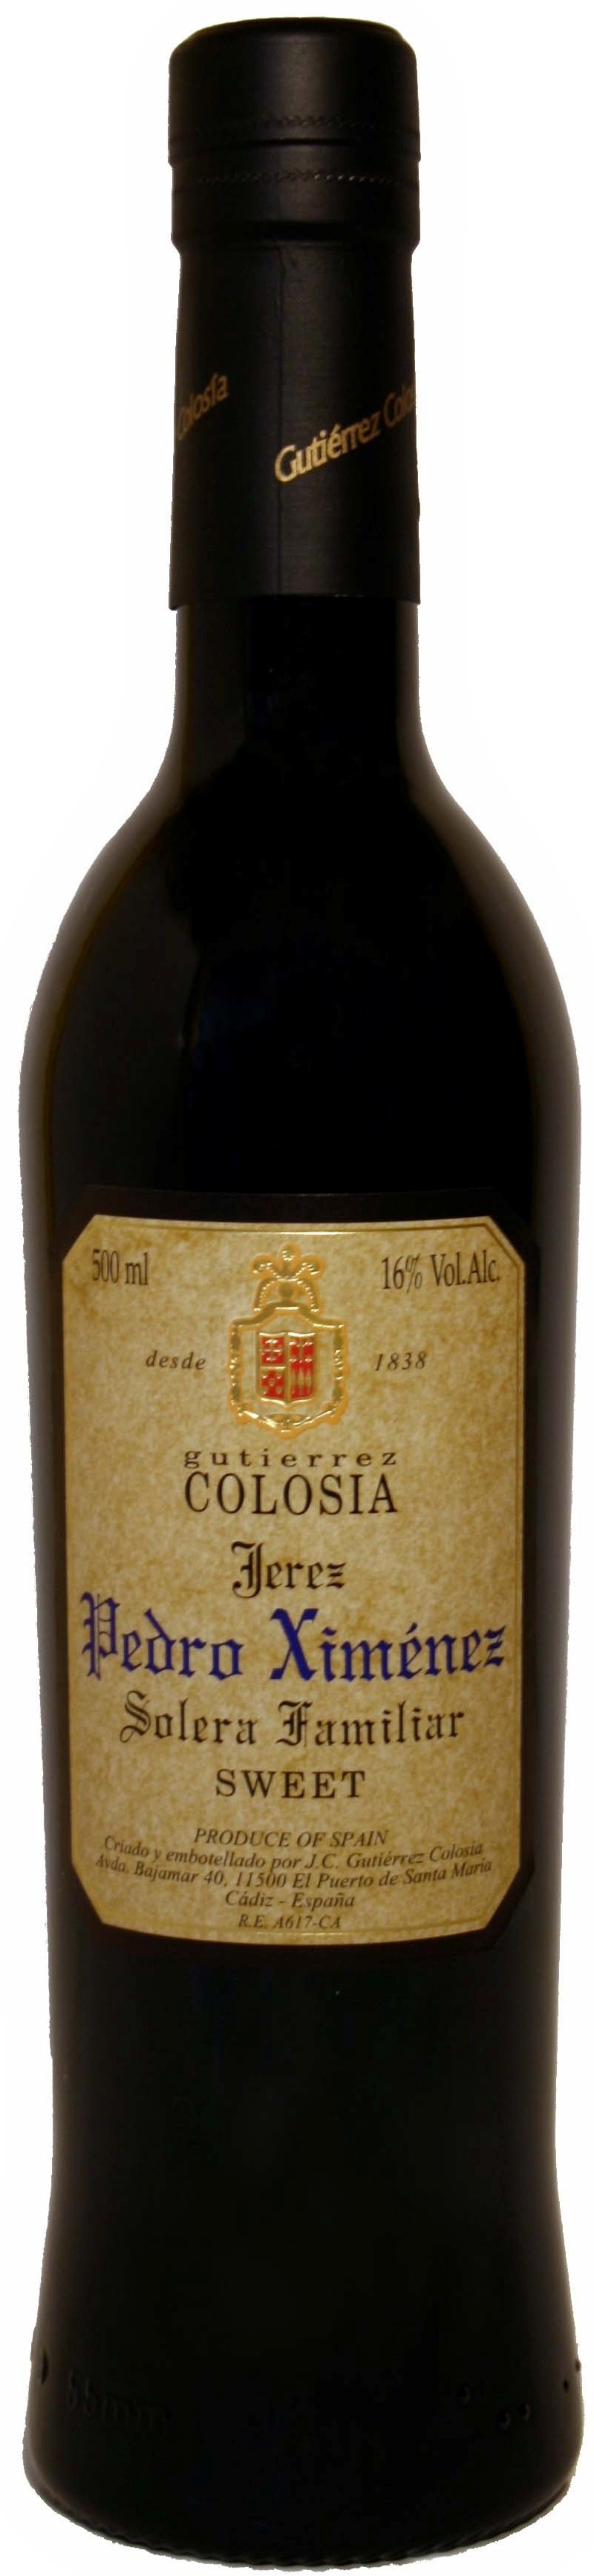 Logo Wein Colosía Solera Familiar Pedro Ximénez